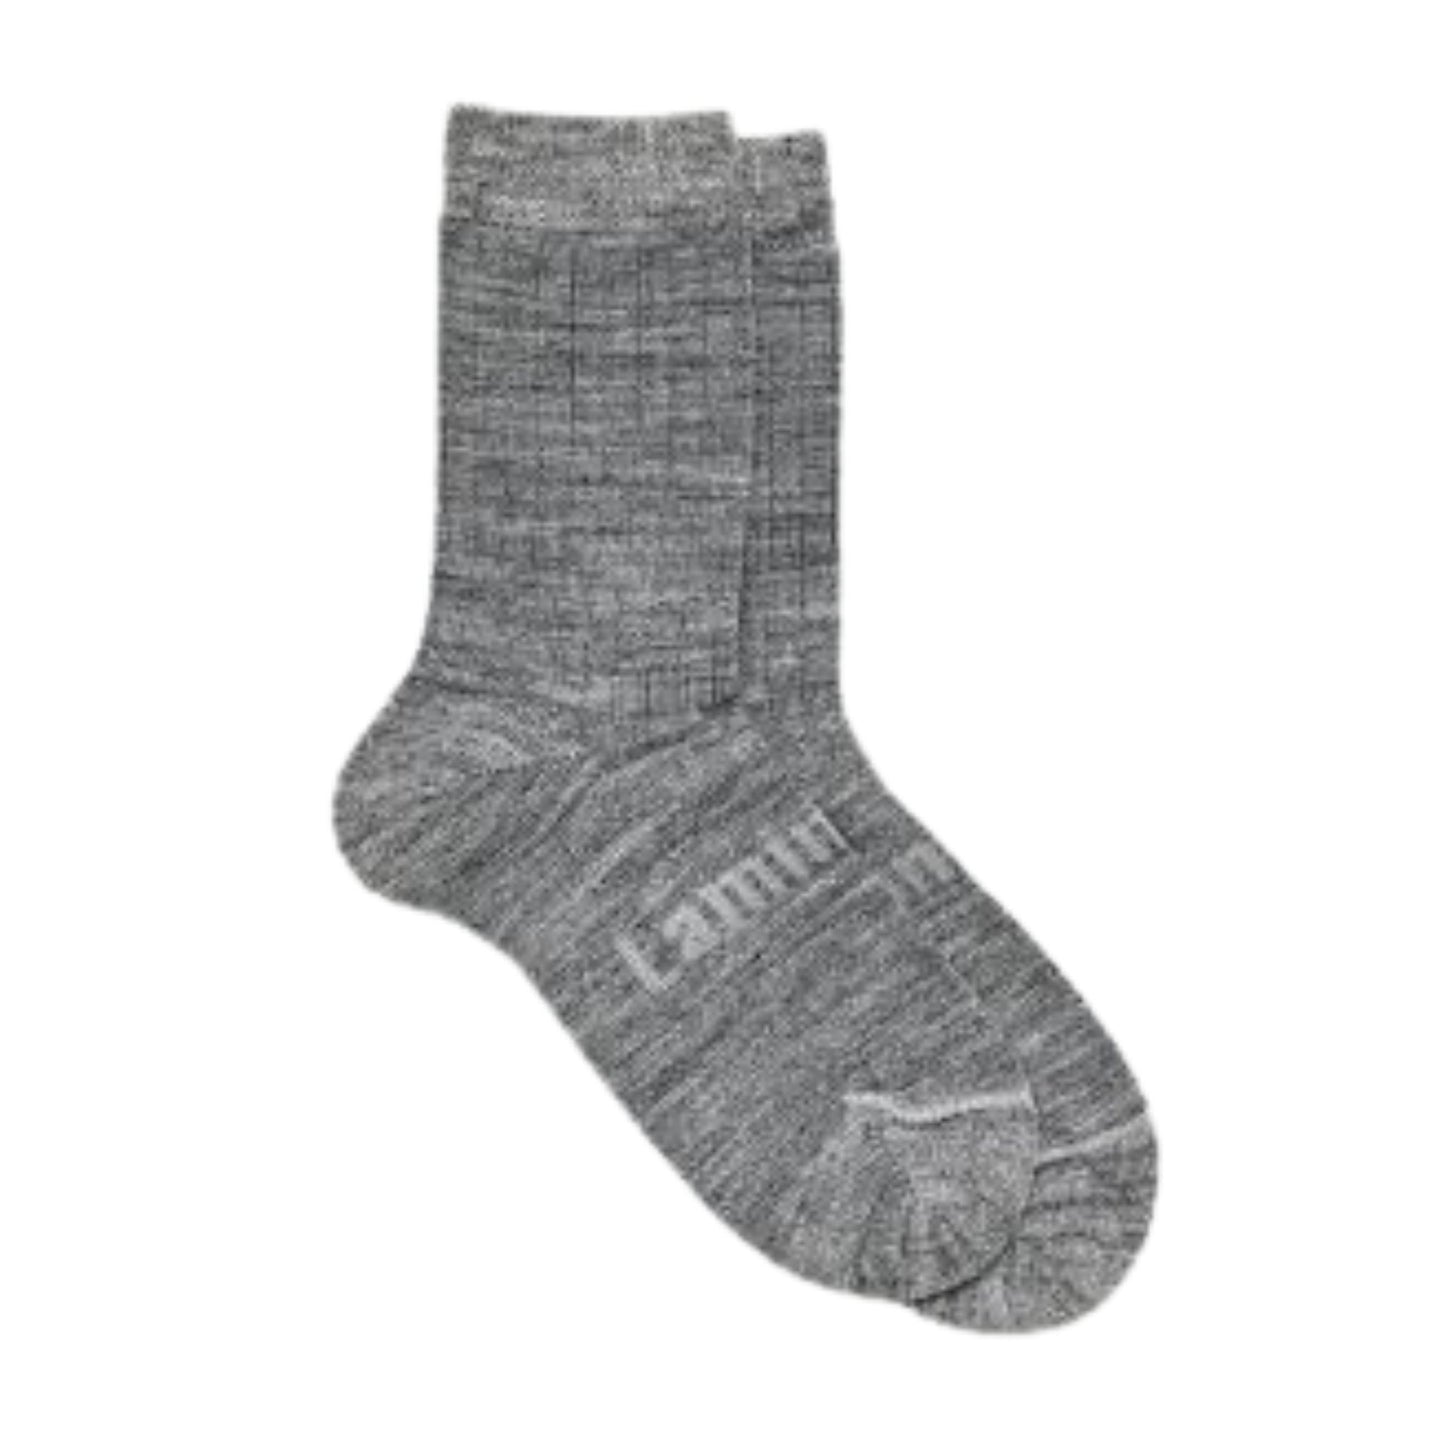 Pair of grey ribbed merino socks